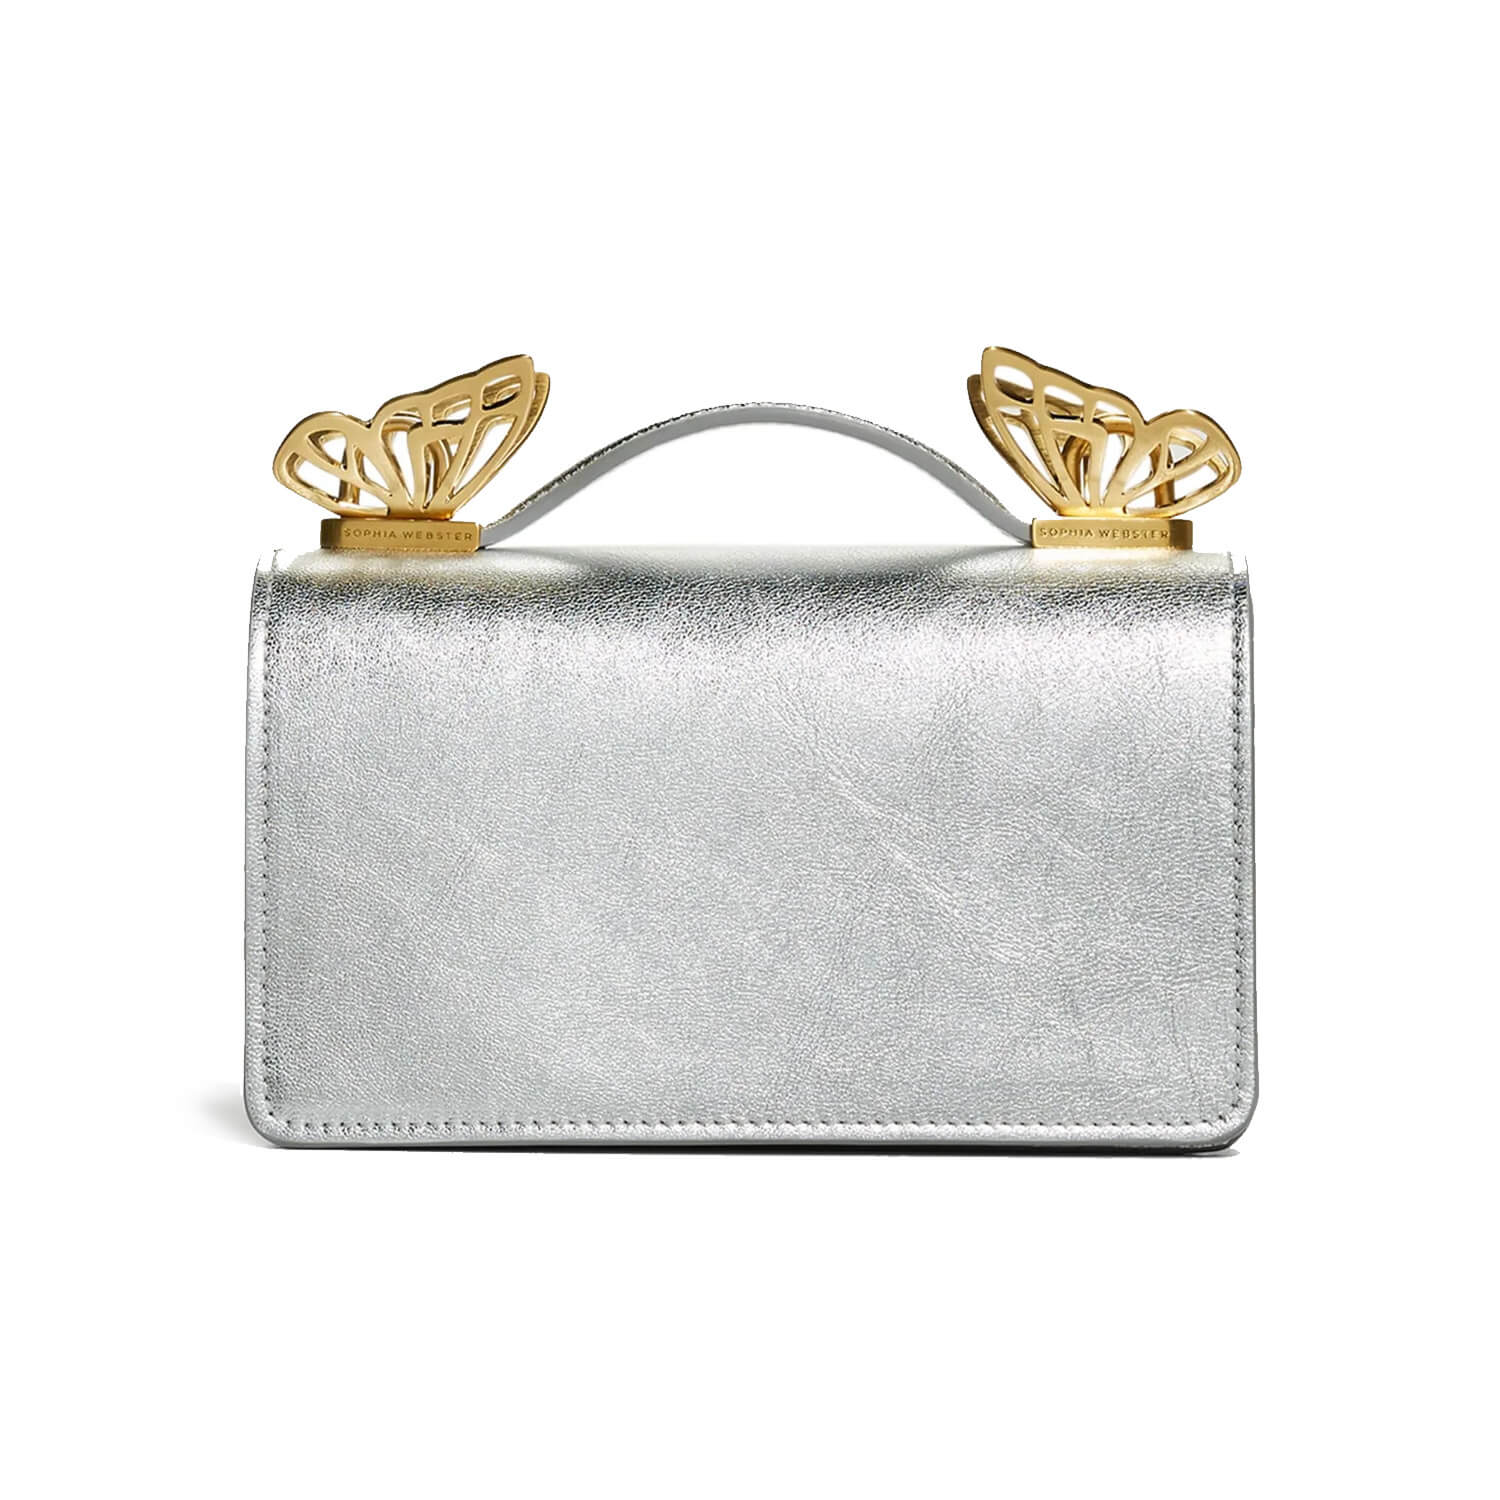 Sophia Webster Mariposa Mini Metallic Top-Handle Bag